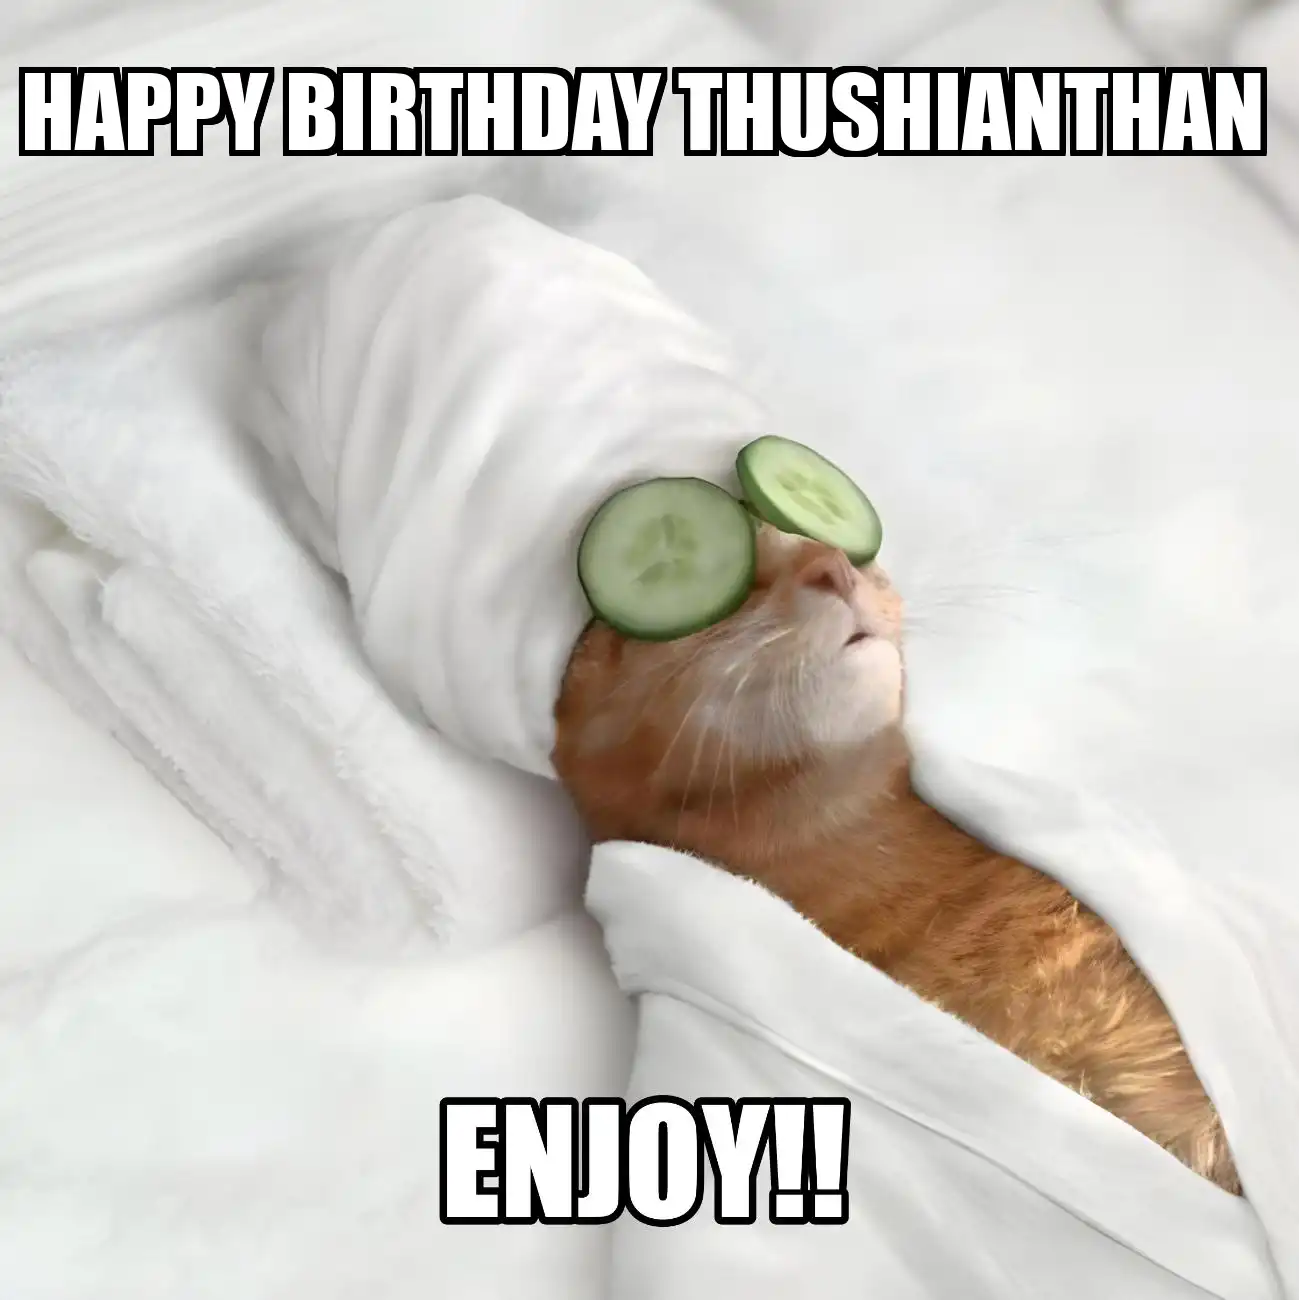 Happy Birthday Thushianthan Enjoy Cat Meme